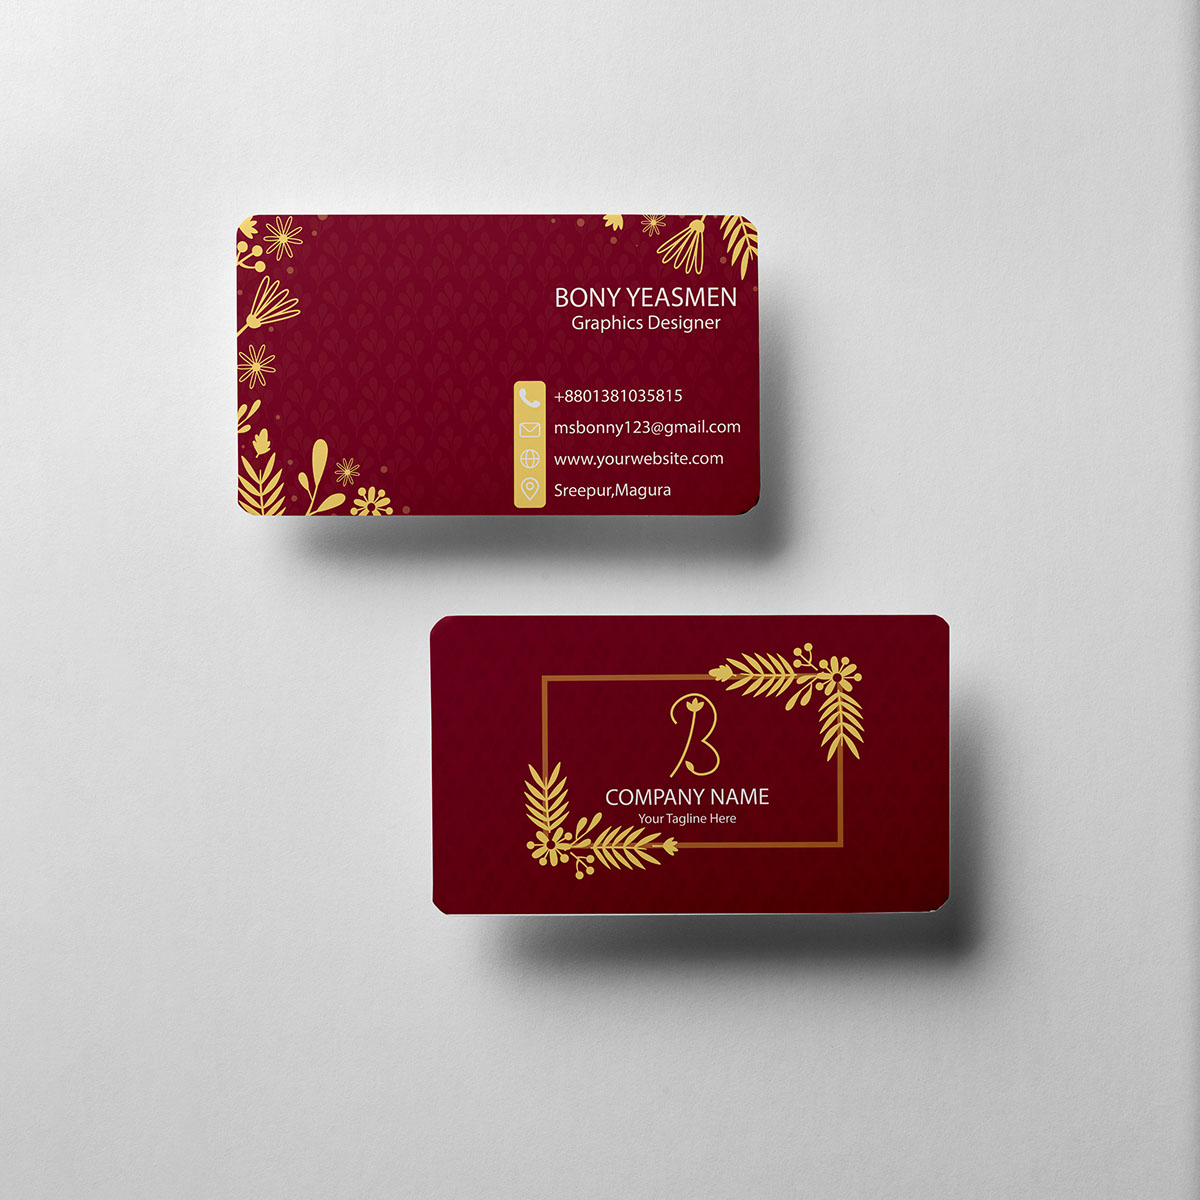 Business card design rendition image